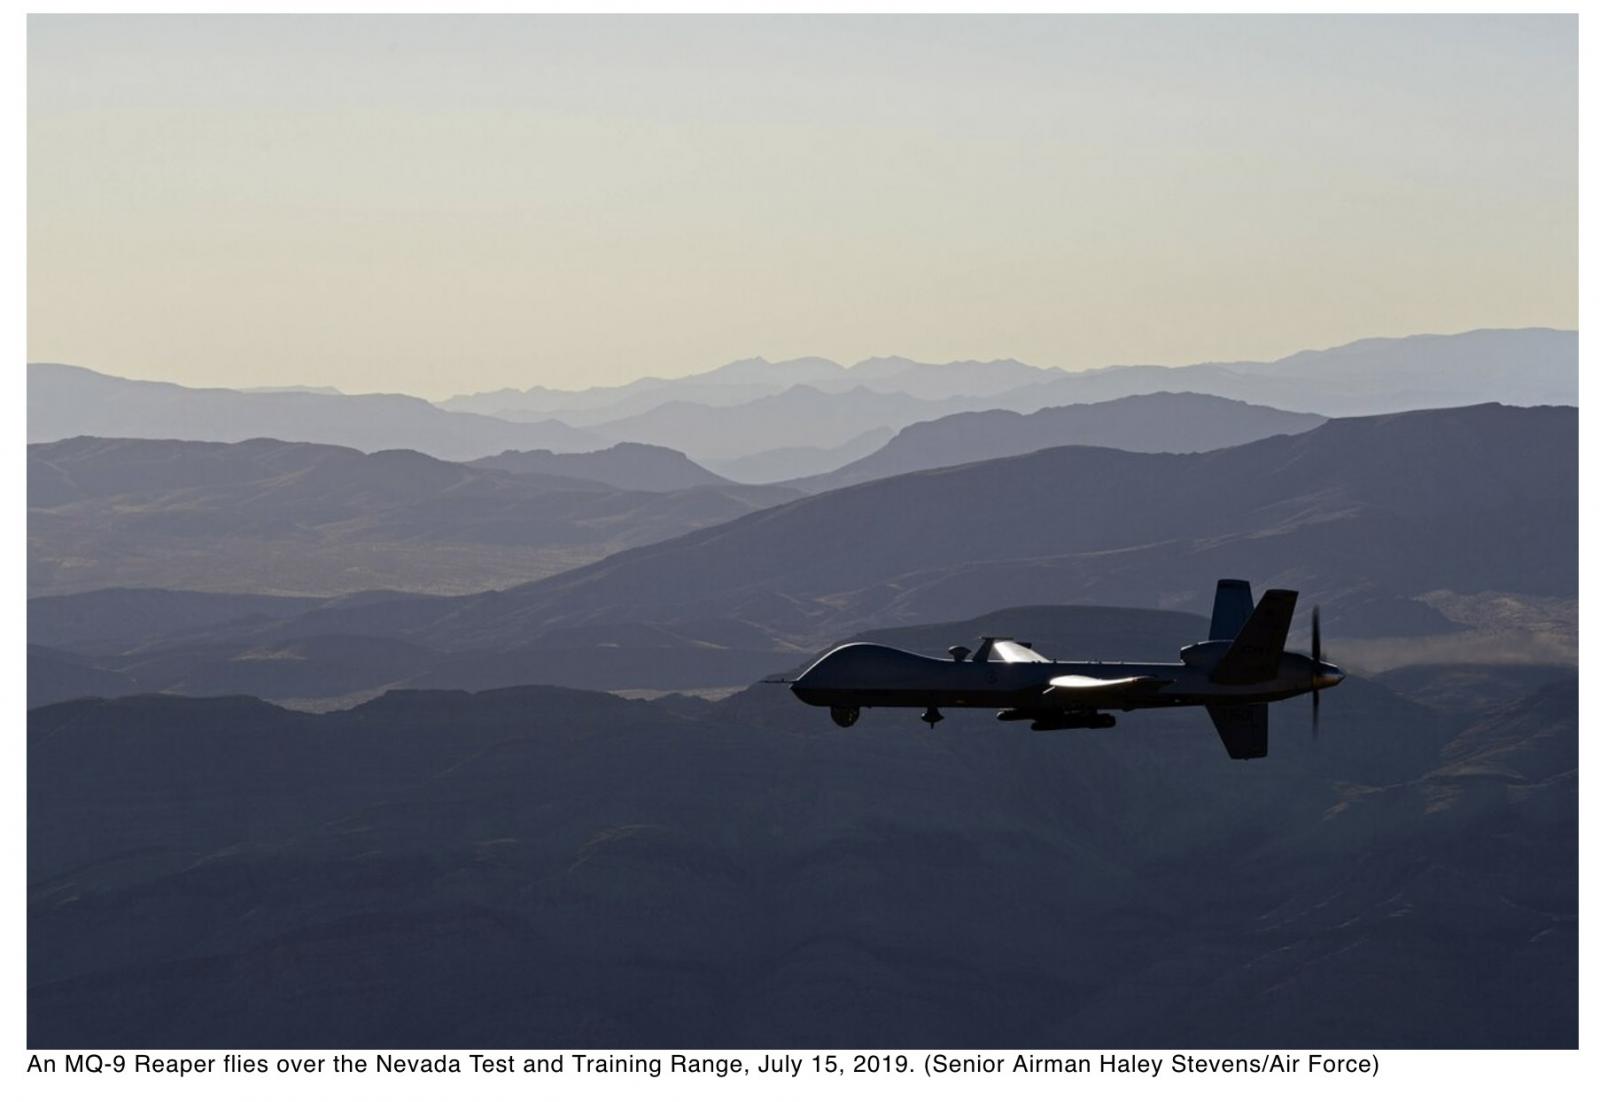  Afghan officials: US airstrike killed 10 civilians in Herat